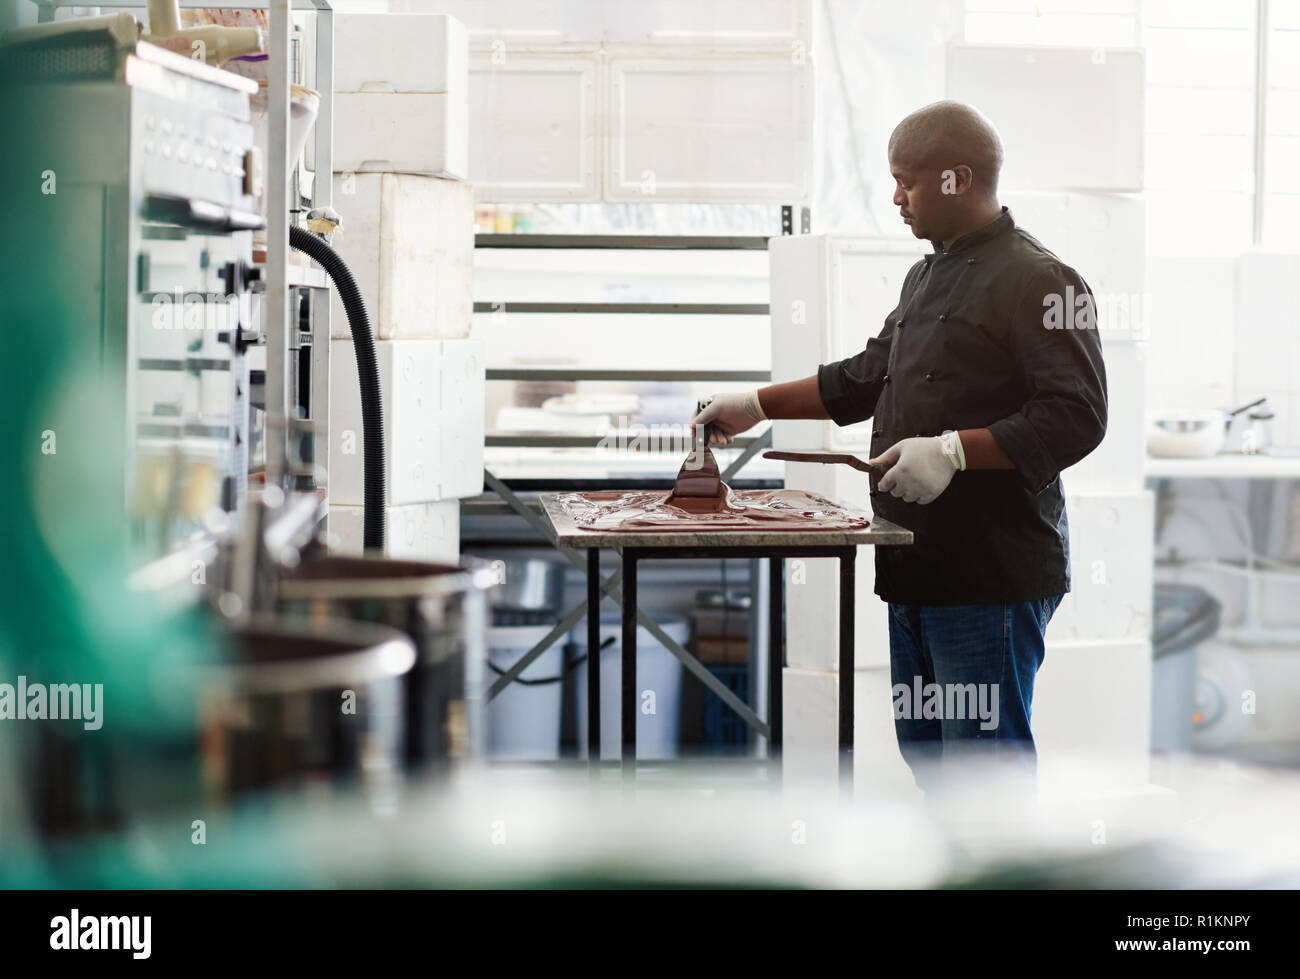 Chocolate artesanal maker trabaja en un cuadro de fábrica Foto de stock